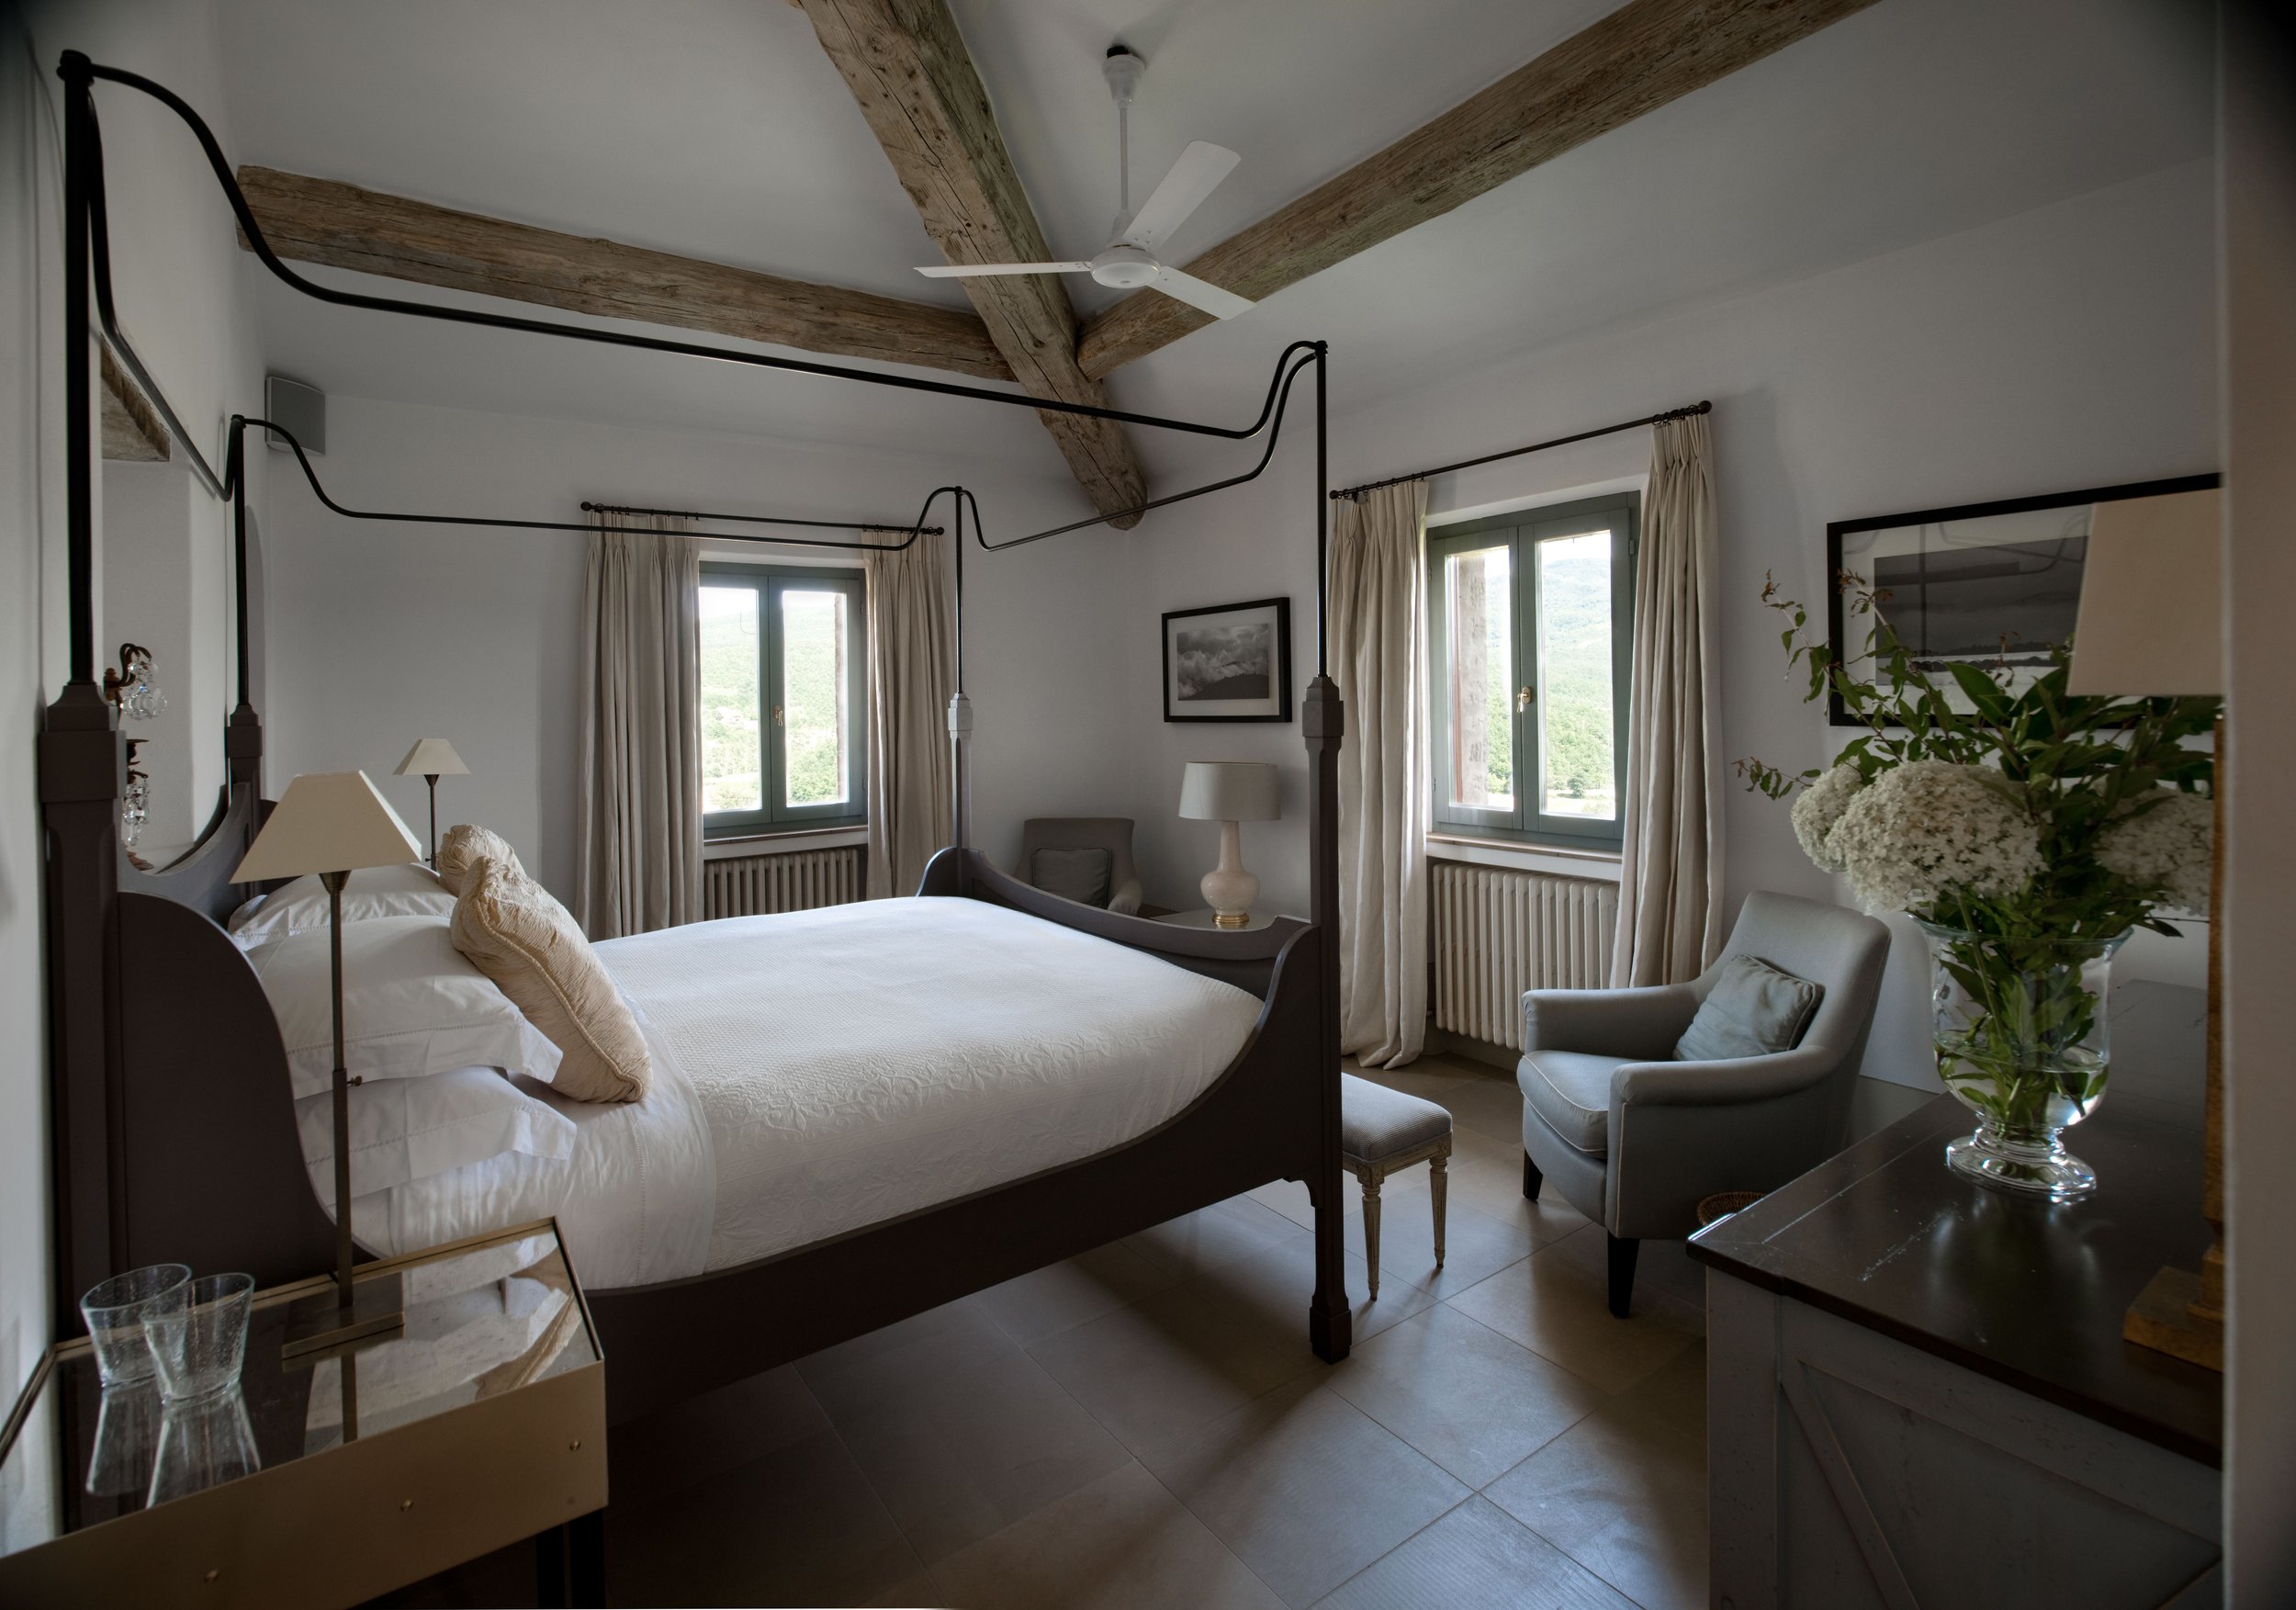 Francis York Exclusive Luxury Villa Rental in Umbria, Italy 14.jpg